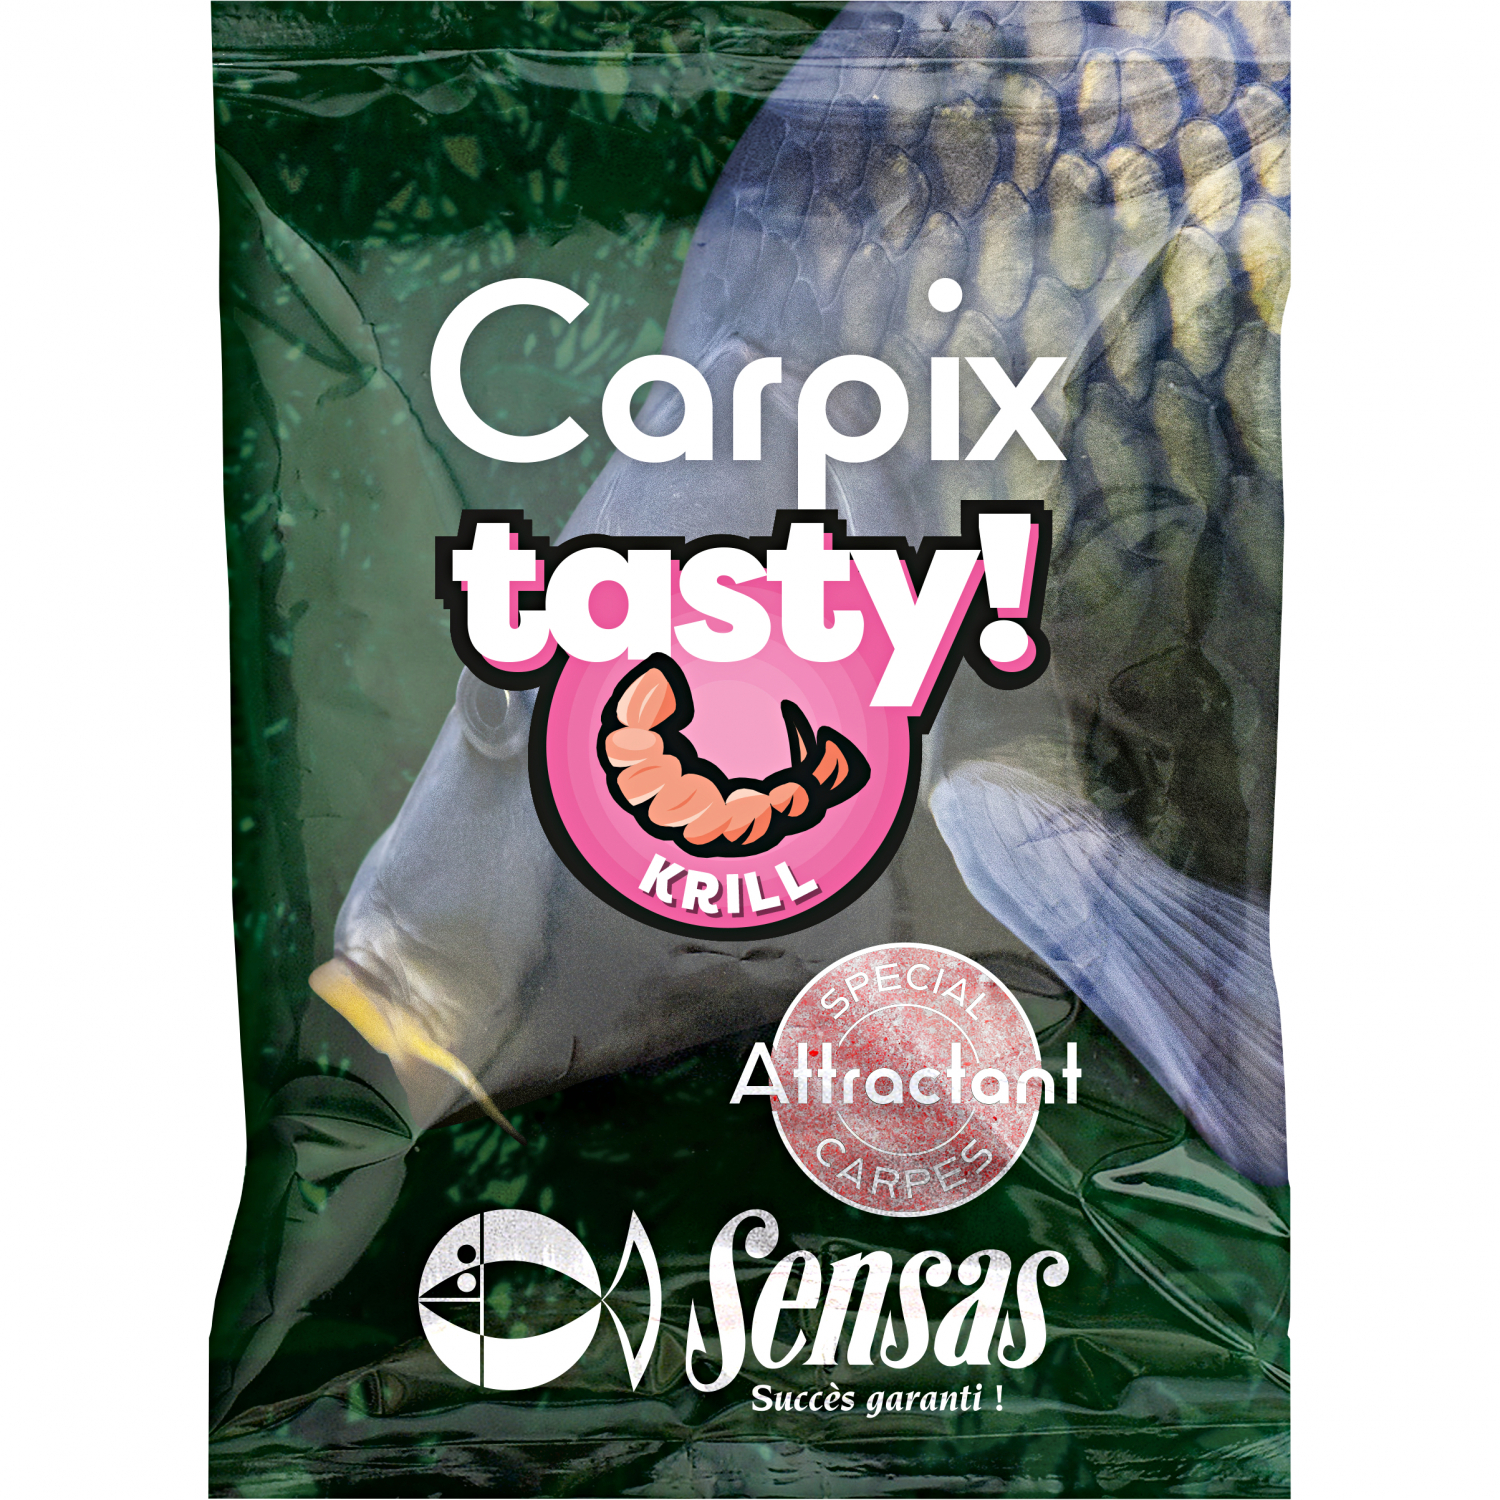 Sensas Lockpulver Carpix Tasty (Krill) 